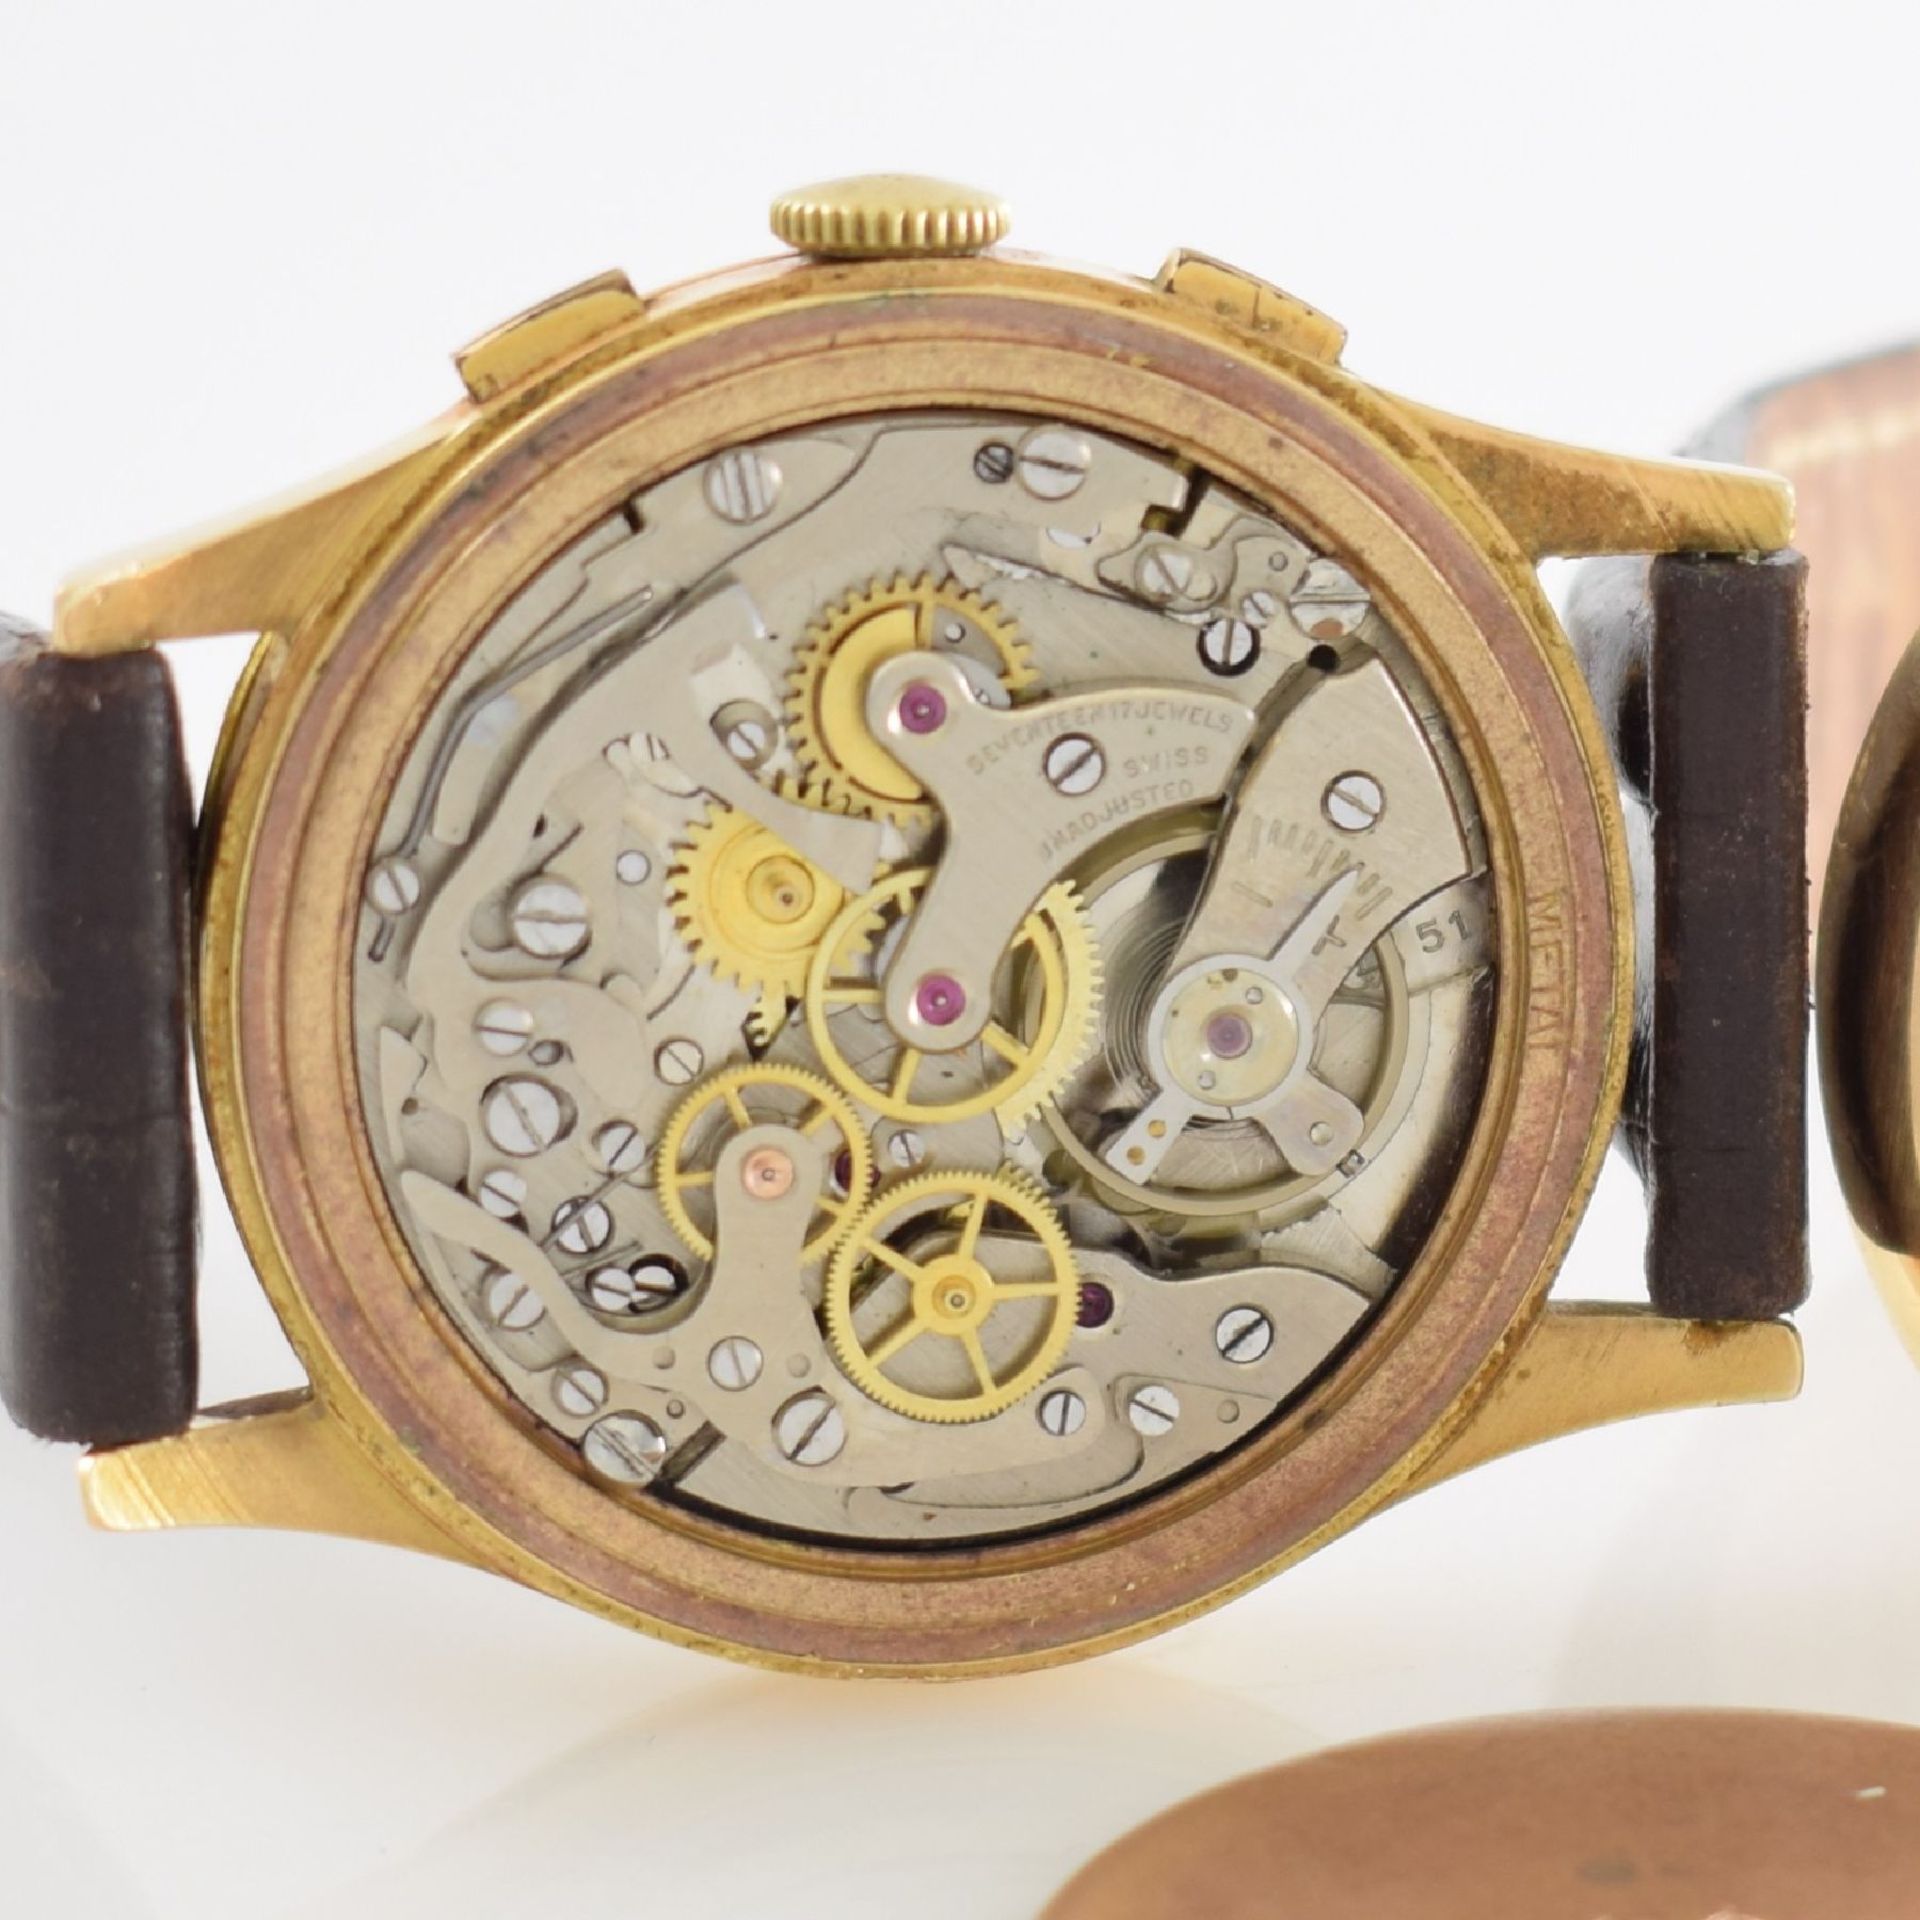 HESPERIA/CHRONOGRAPHE SUISSE Armbandchronograph in RoseG 585/000, Handaufzug, Schweiz um 1945, 3- - Bild 10 aus 10